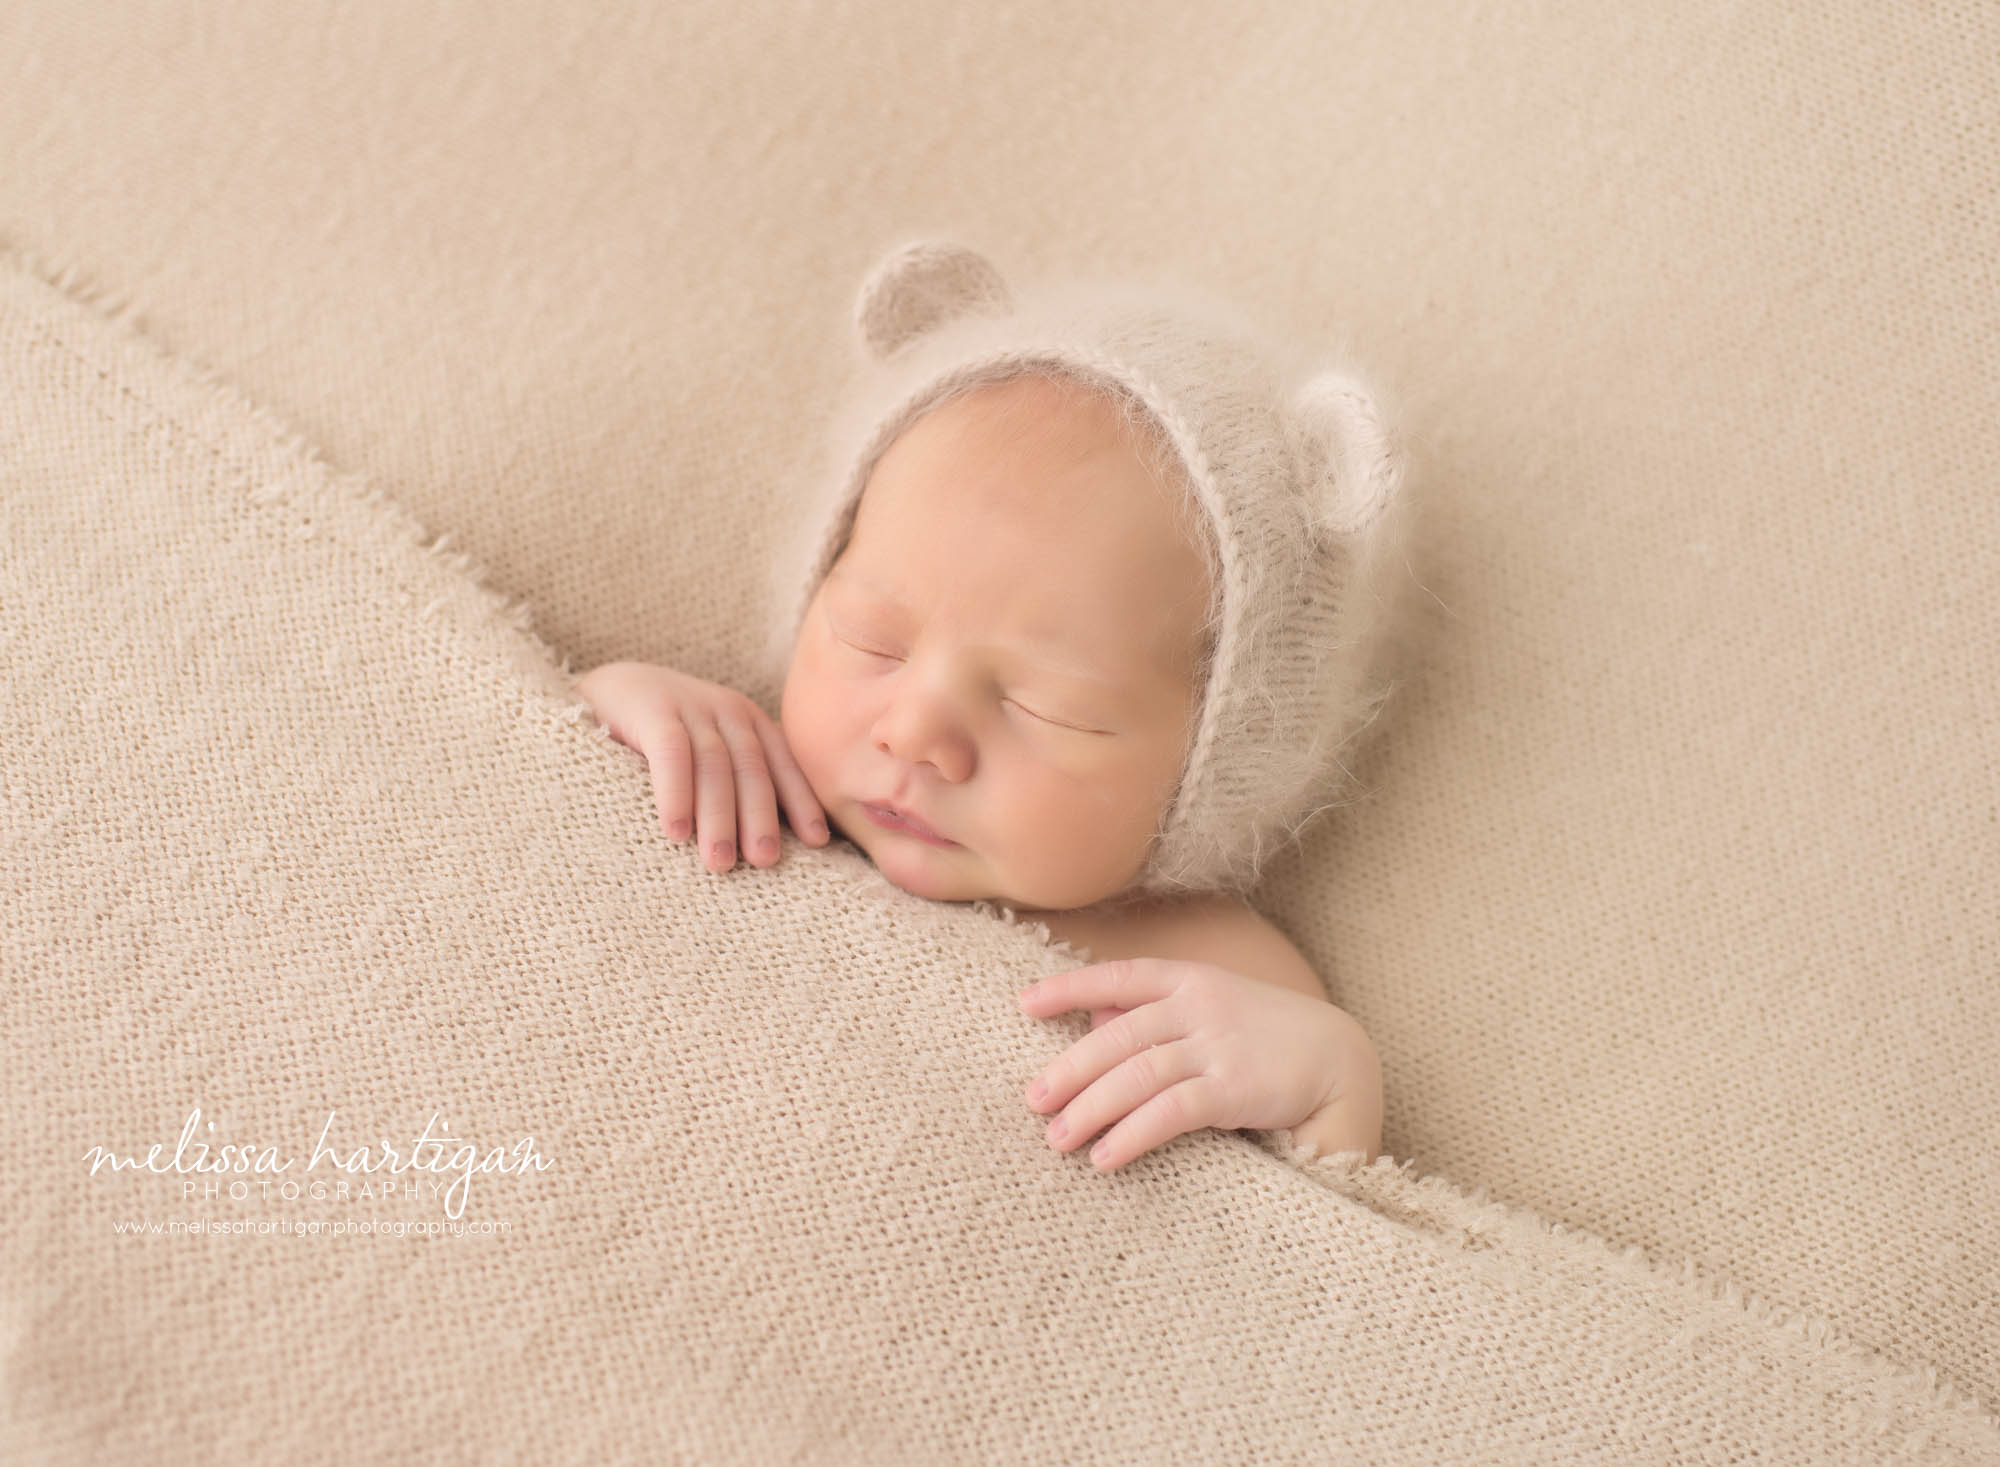 Melissa Hartigan Photography CT Newborn Photographer Braeden Newborn Session baby boy sleeping under tan blanket wearing knit hat with ears